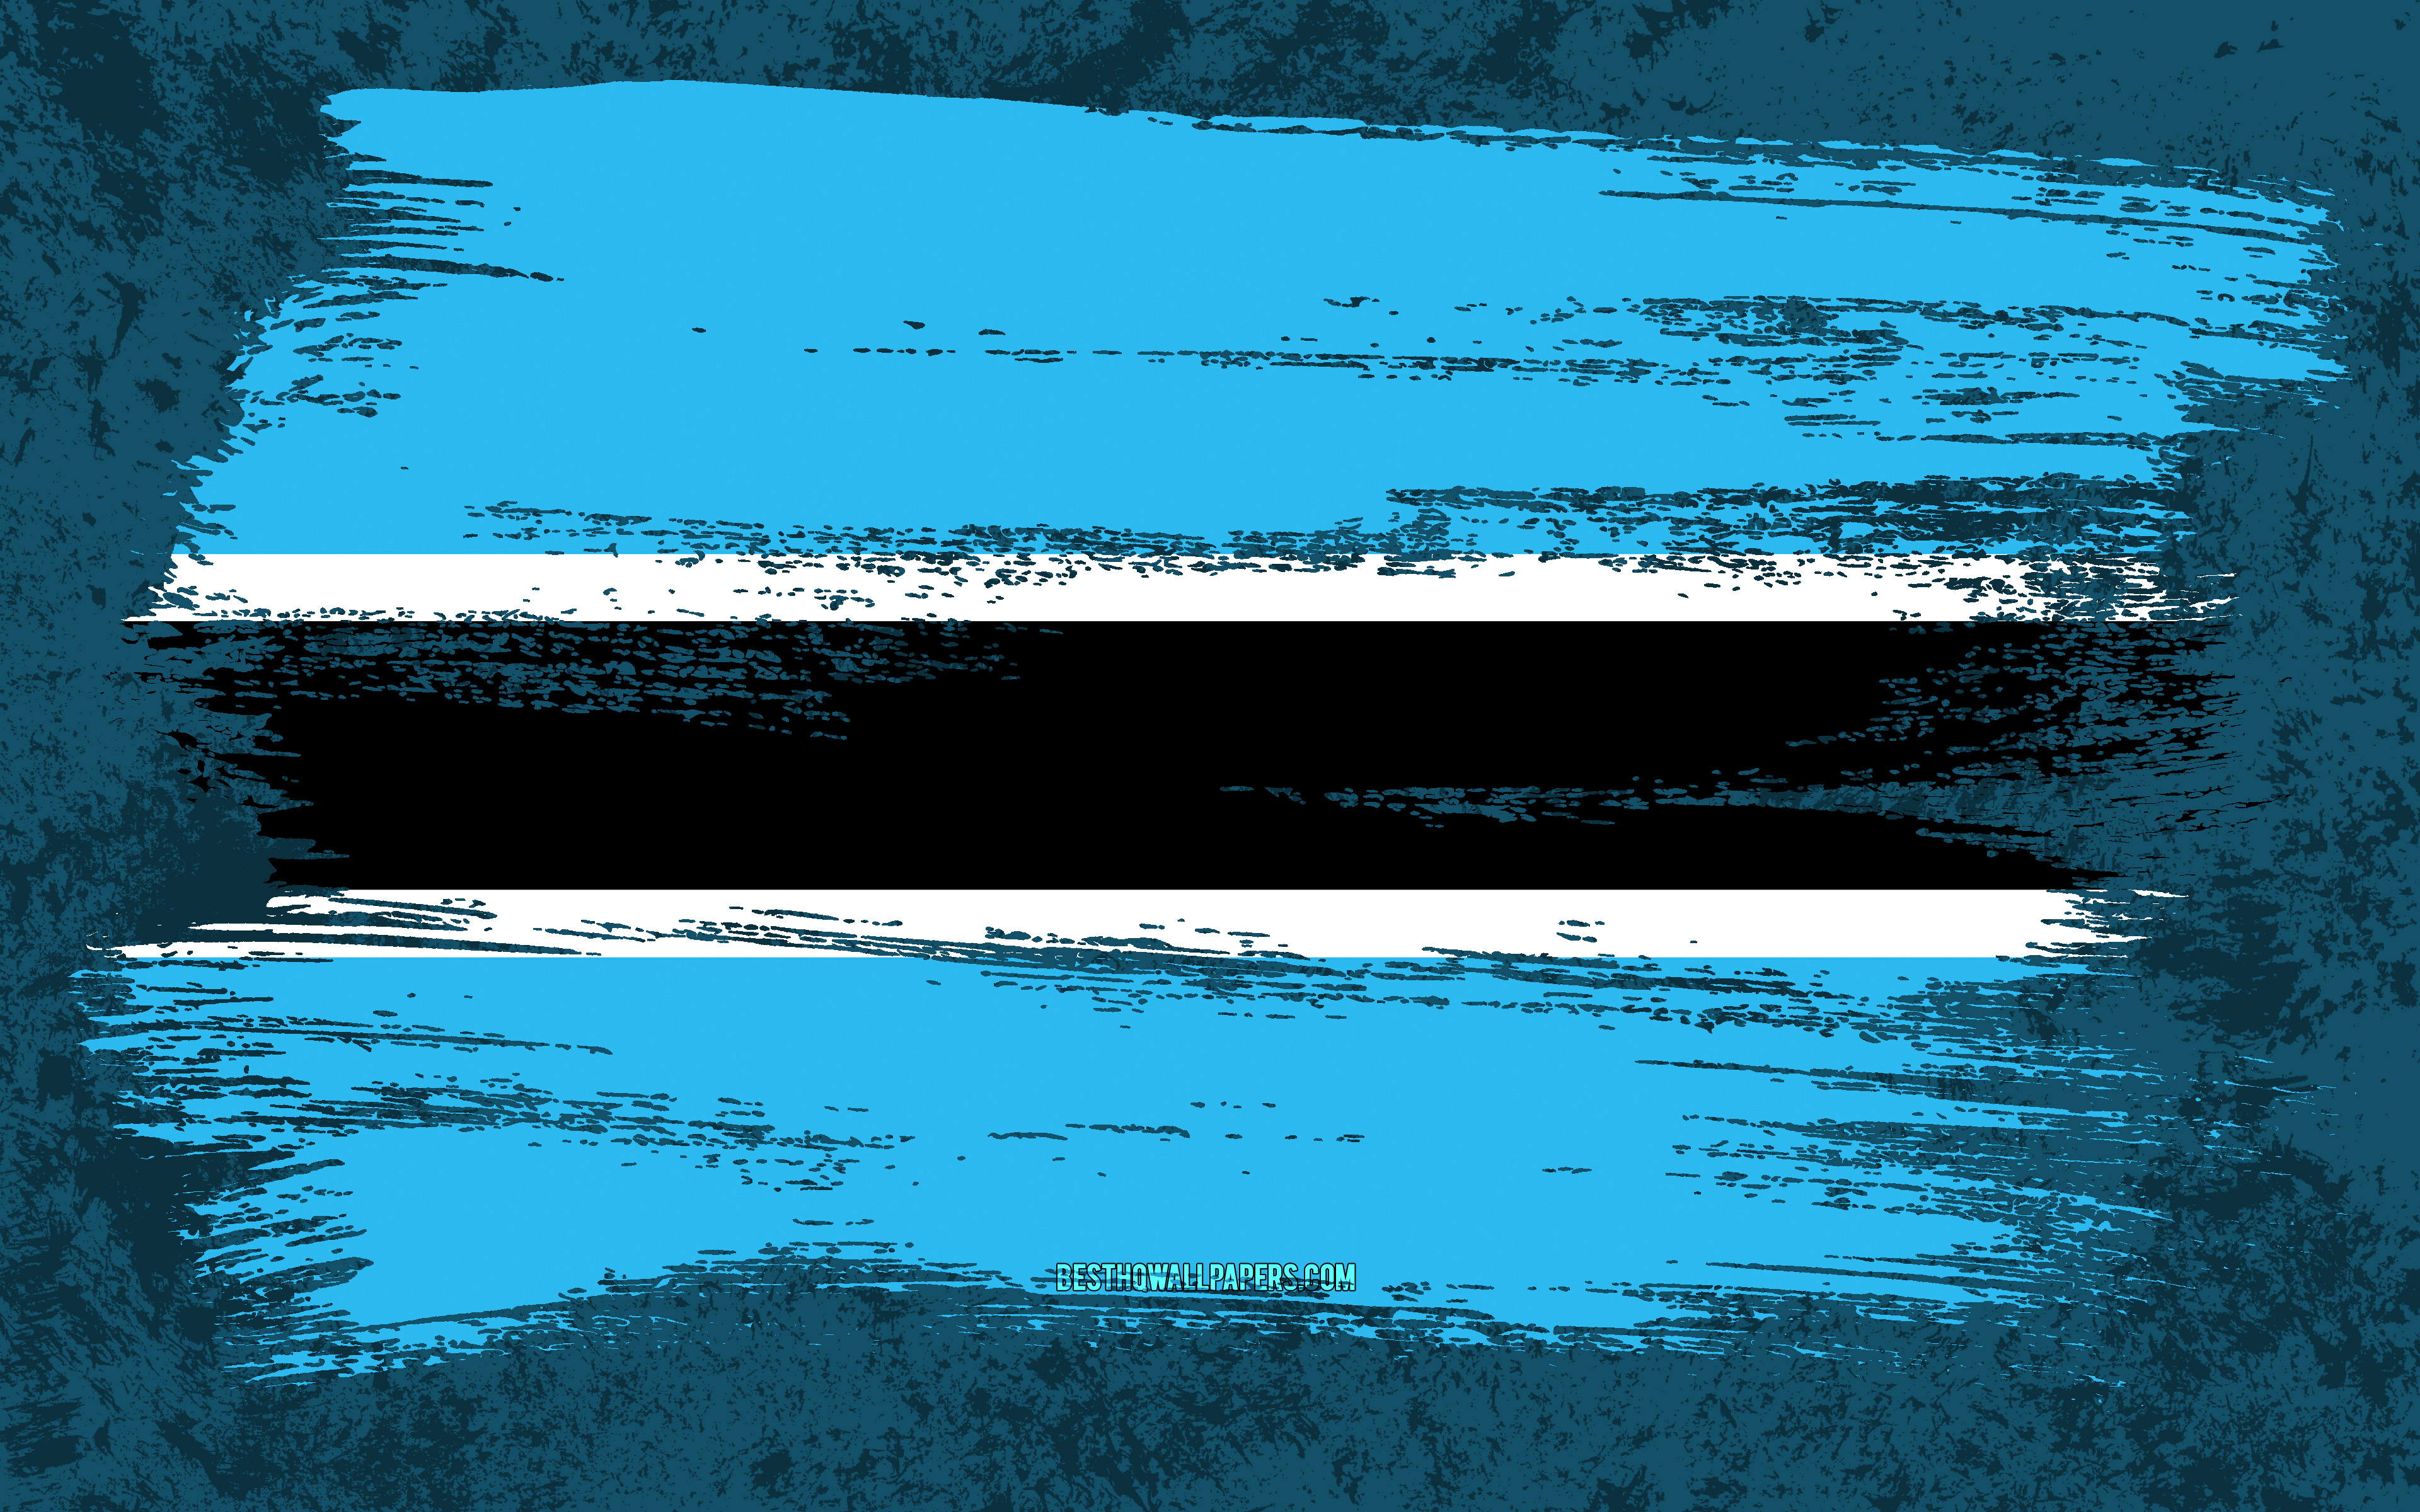 Botswana Flag Wallpapers